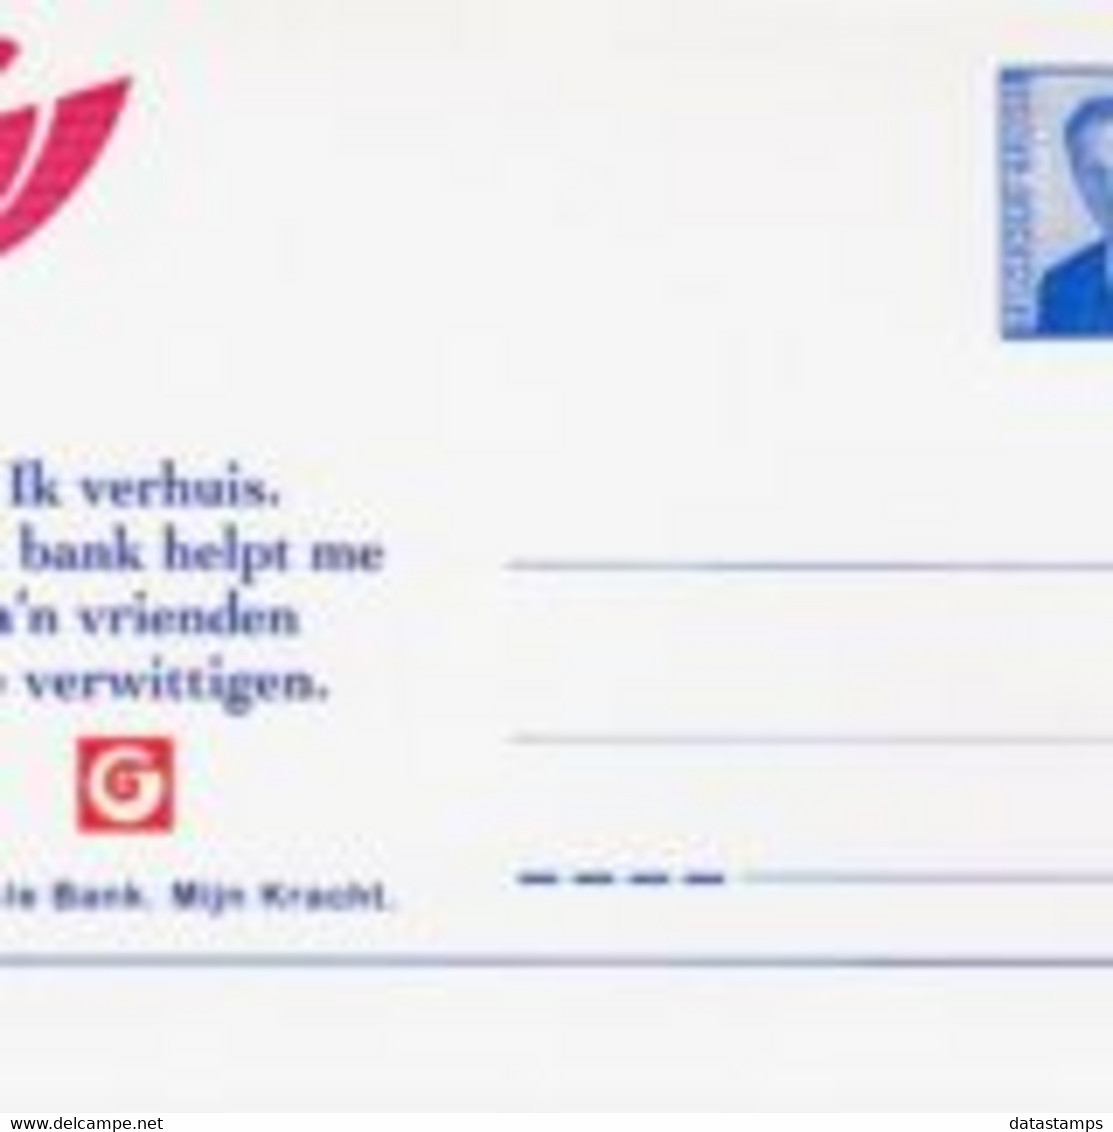 België 1998 - Postcard - XX - Address Change General Bank - Avis Changement Adresse